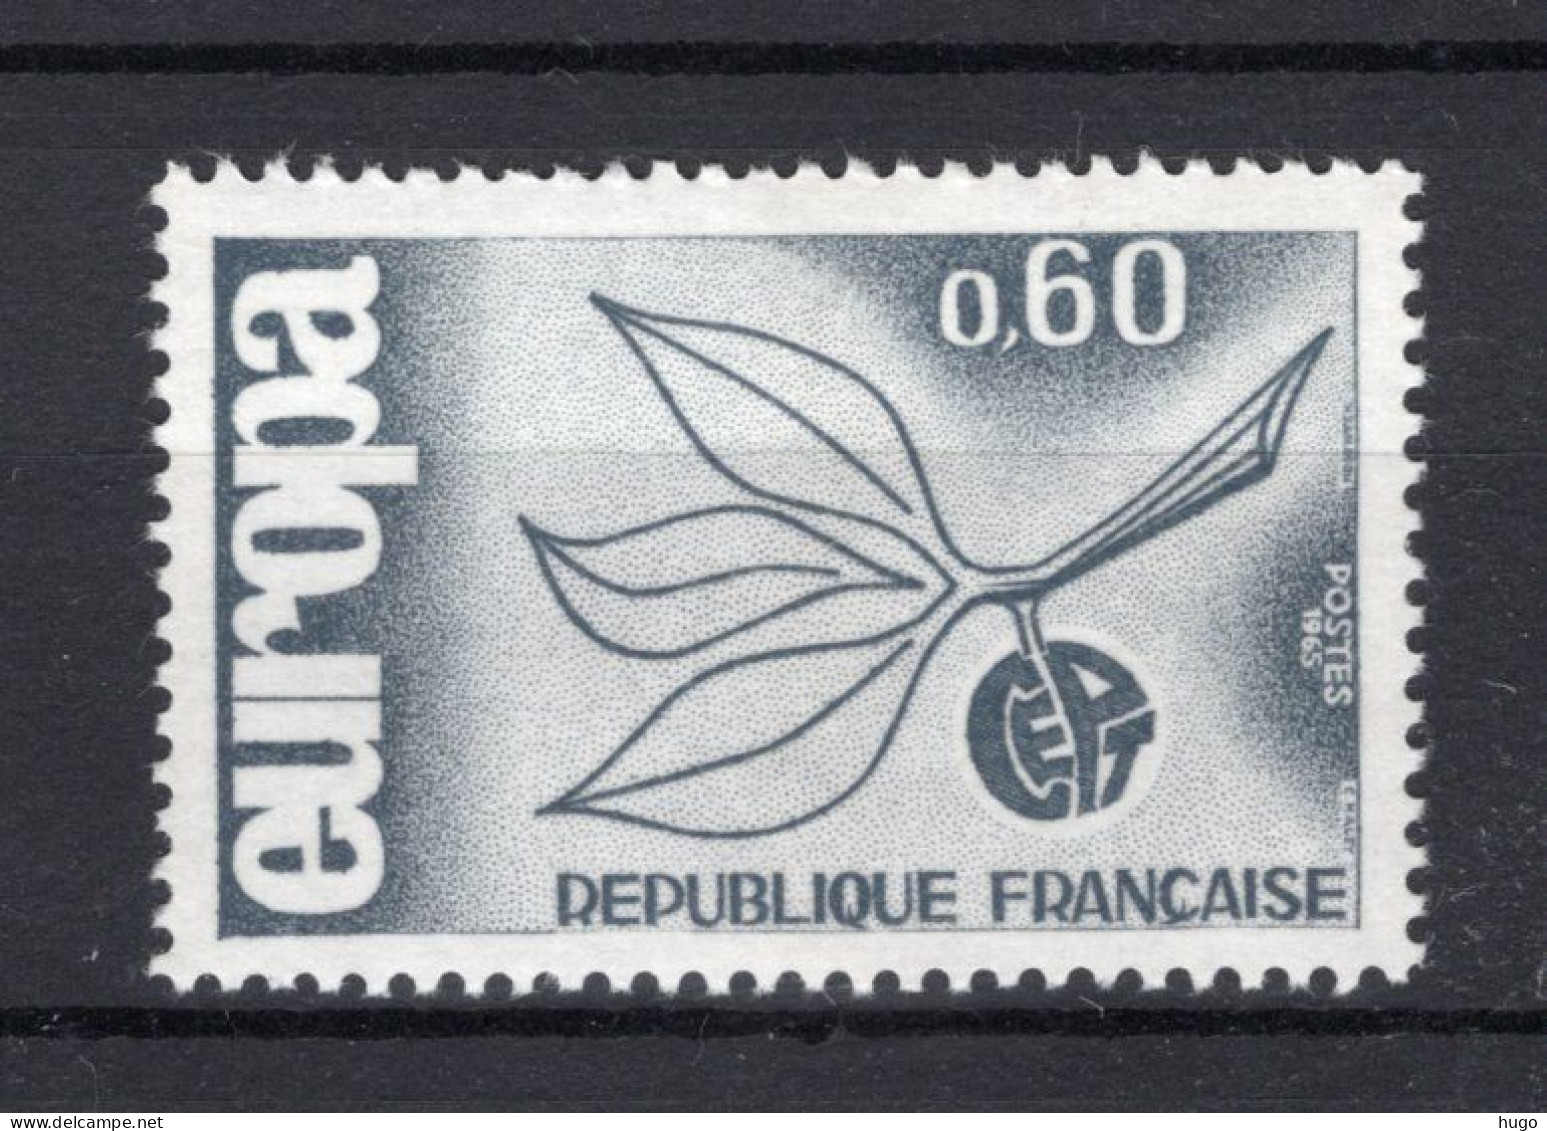 FRANKRIJK Yt. 1456 MNH 1965 - Nuevos